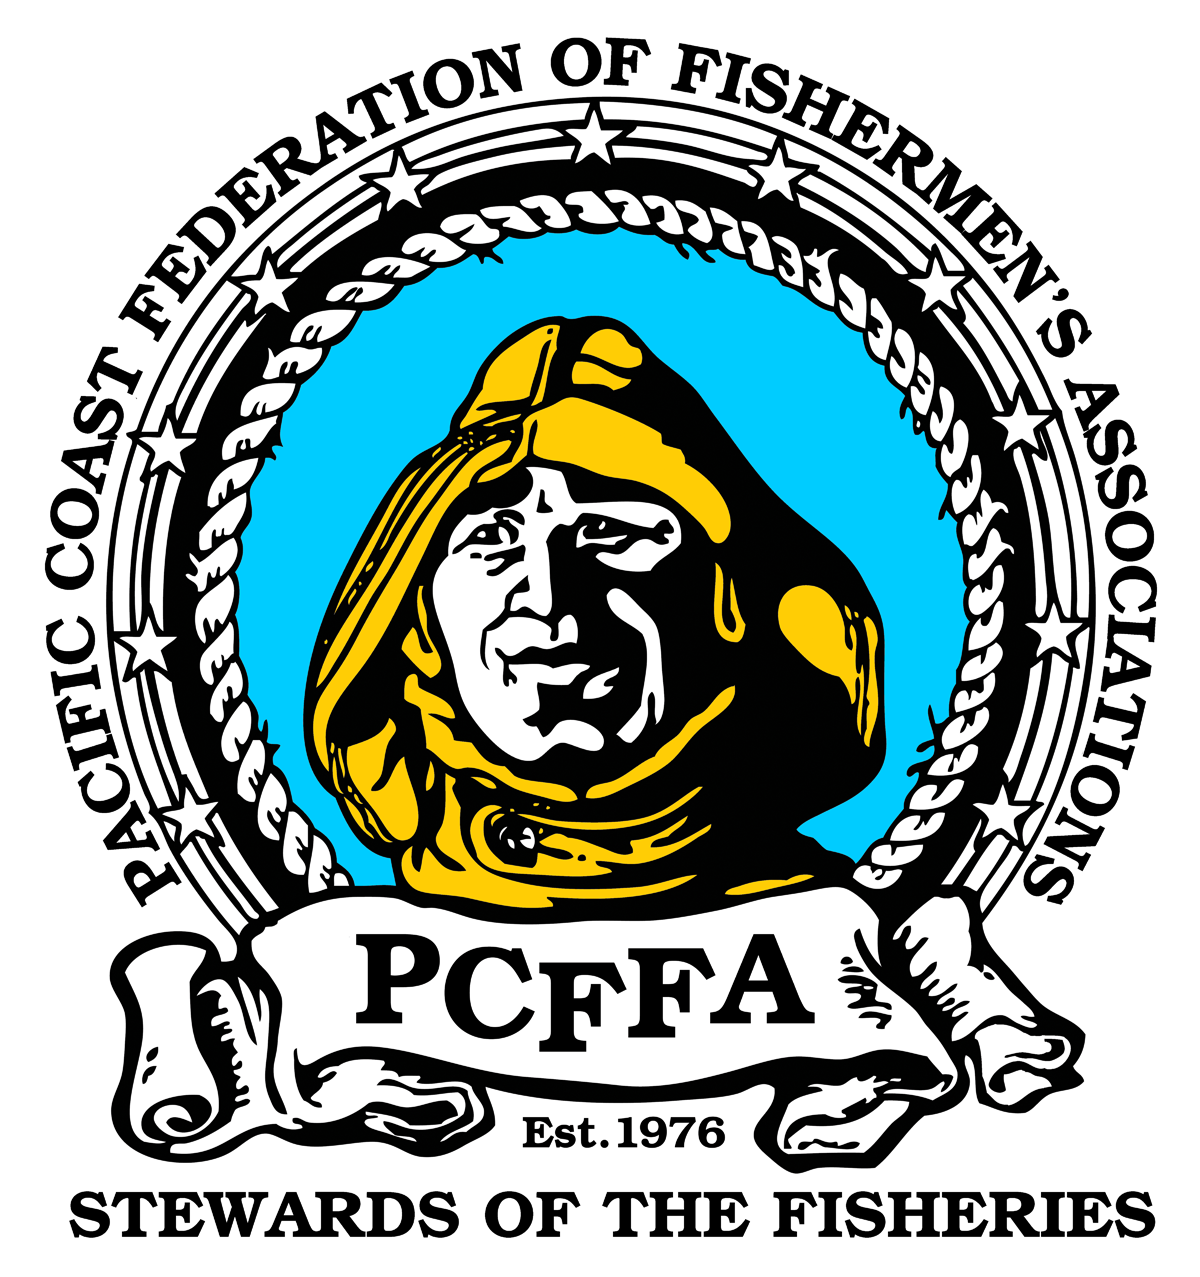 PCFFA-logo-color-sm.png